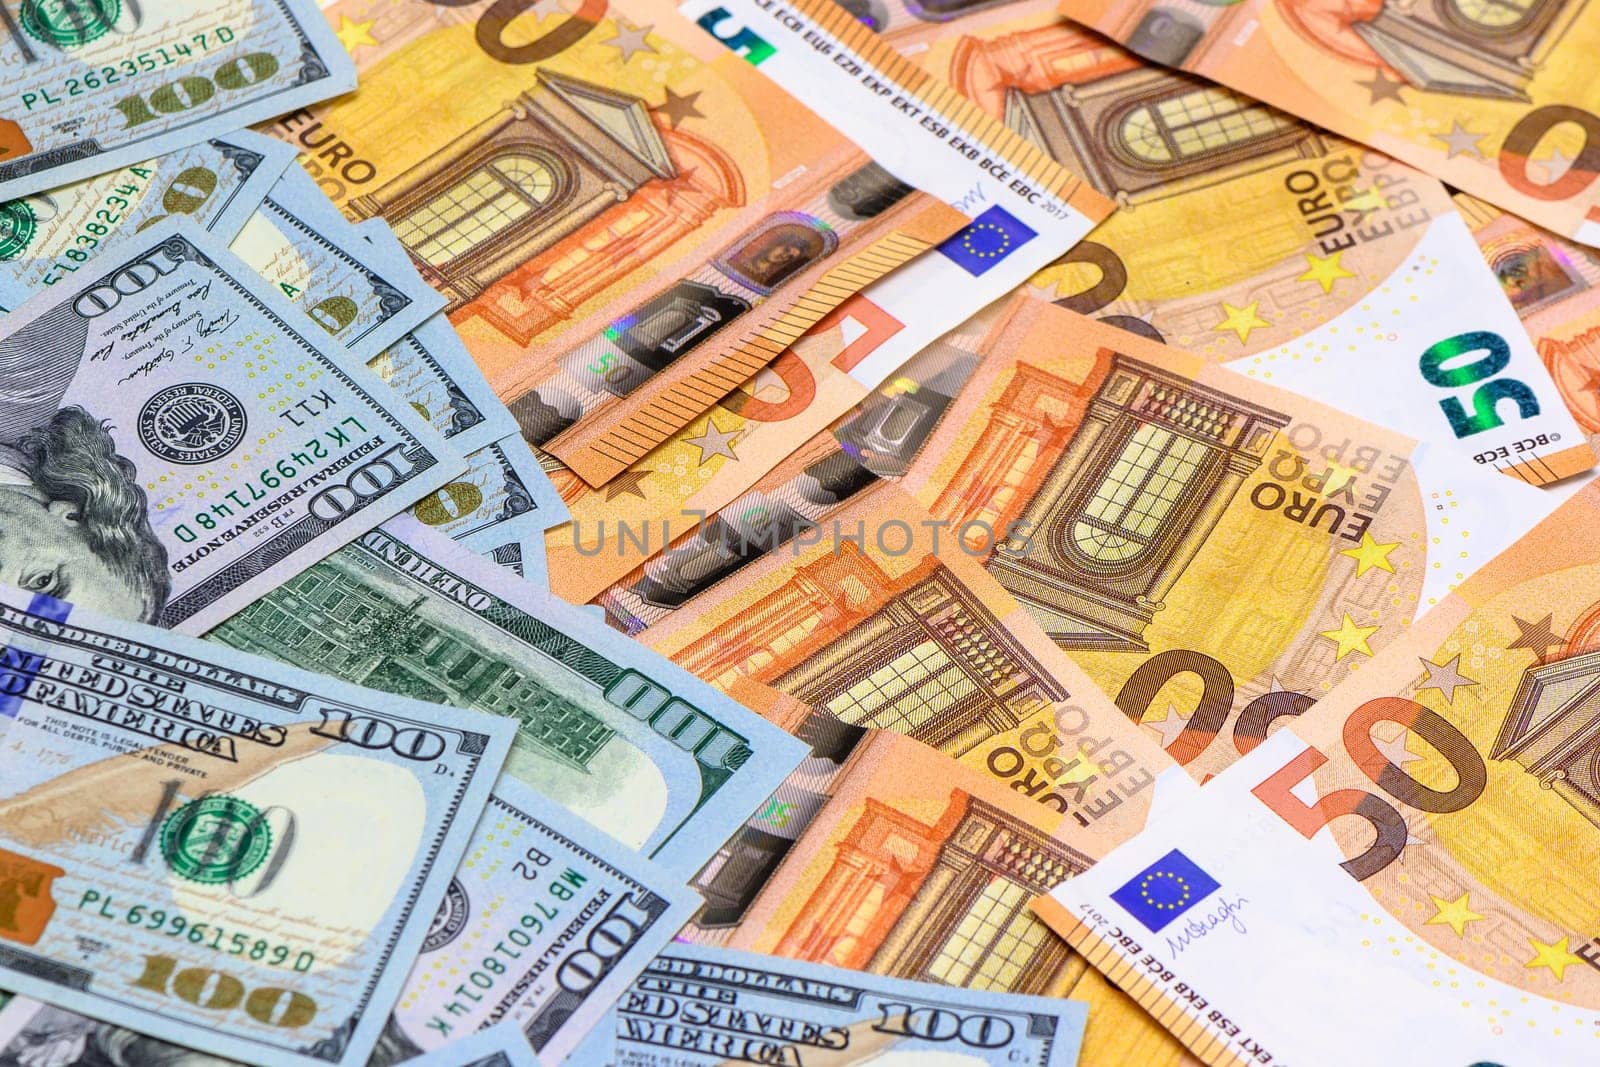 Banknotes of 100 dollars and 50 euros 2